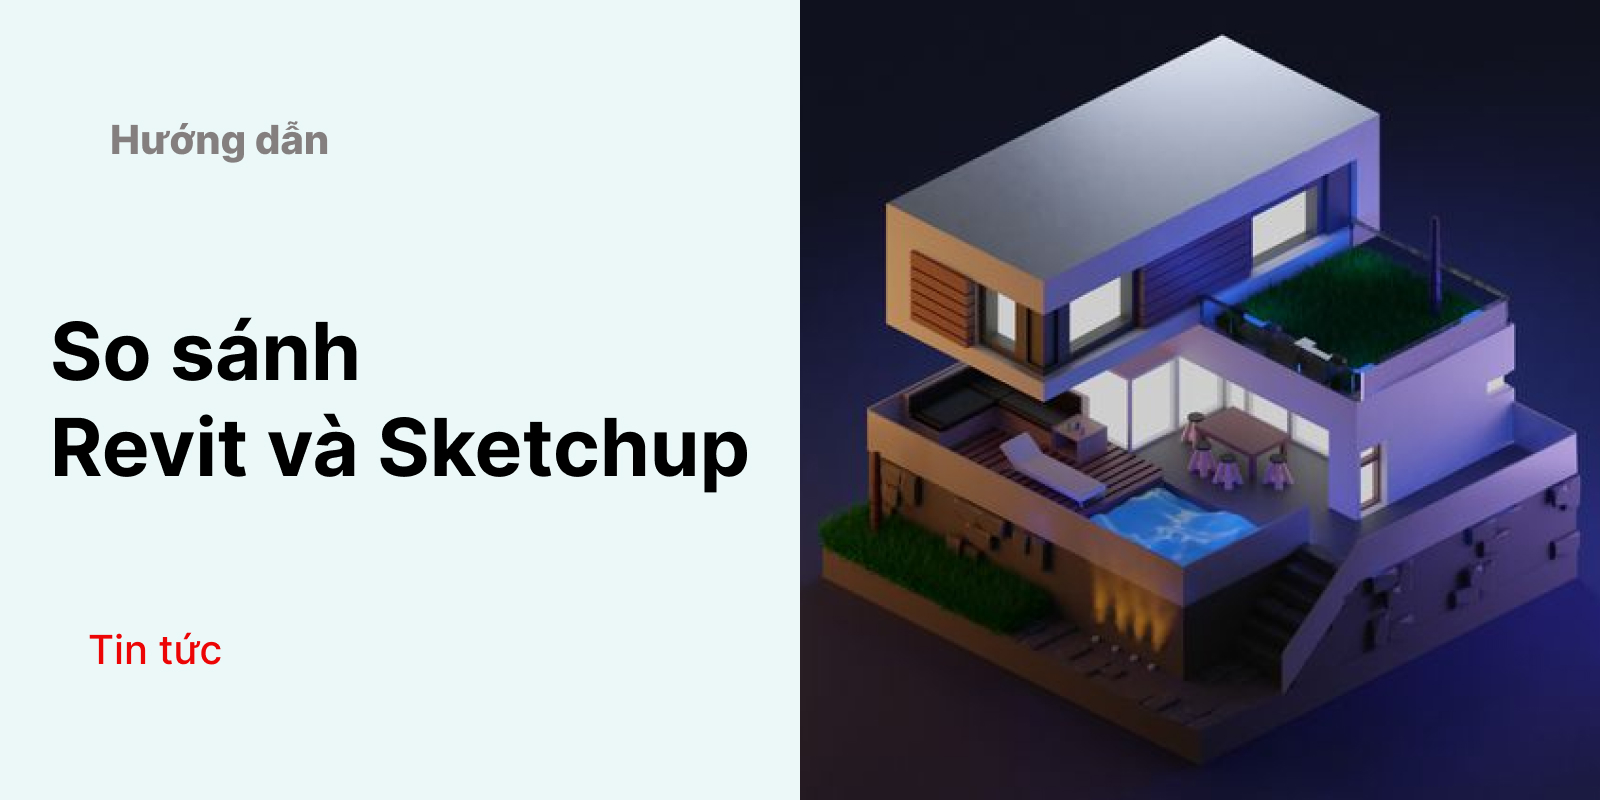 20 Blender Or Sketchup 3d Model ideas | blender, blender 3d, blender  tutorial